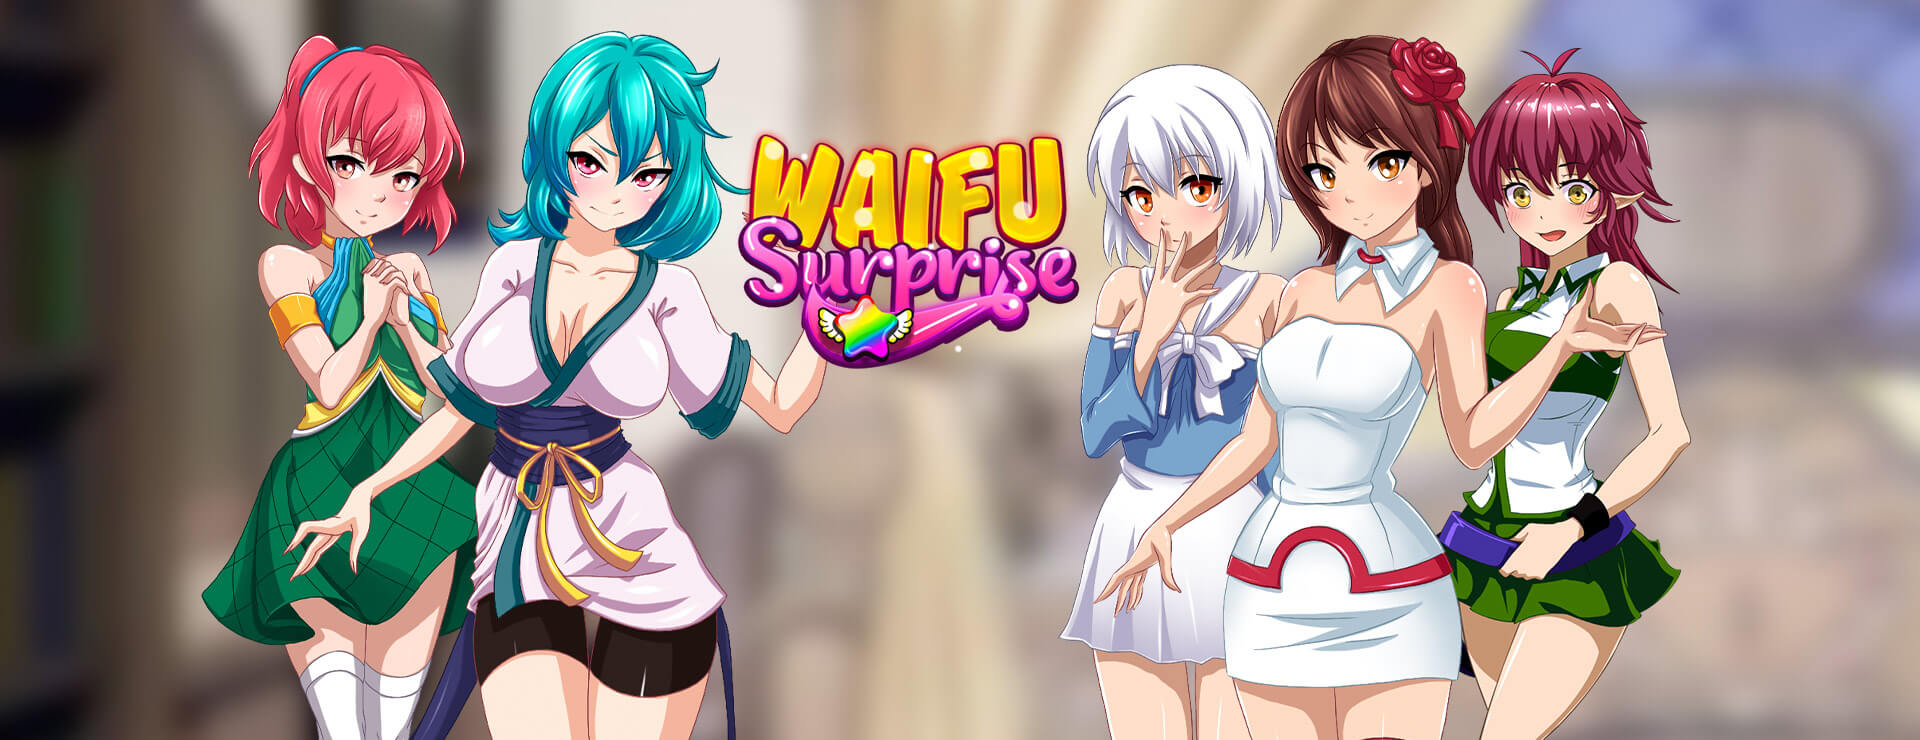 Waifu Surprise - アクションアドベンチャー ゲーム